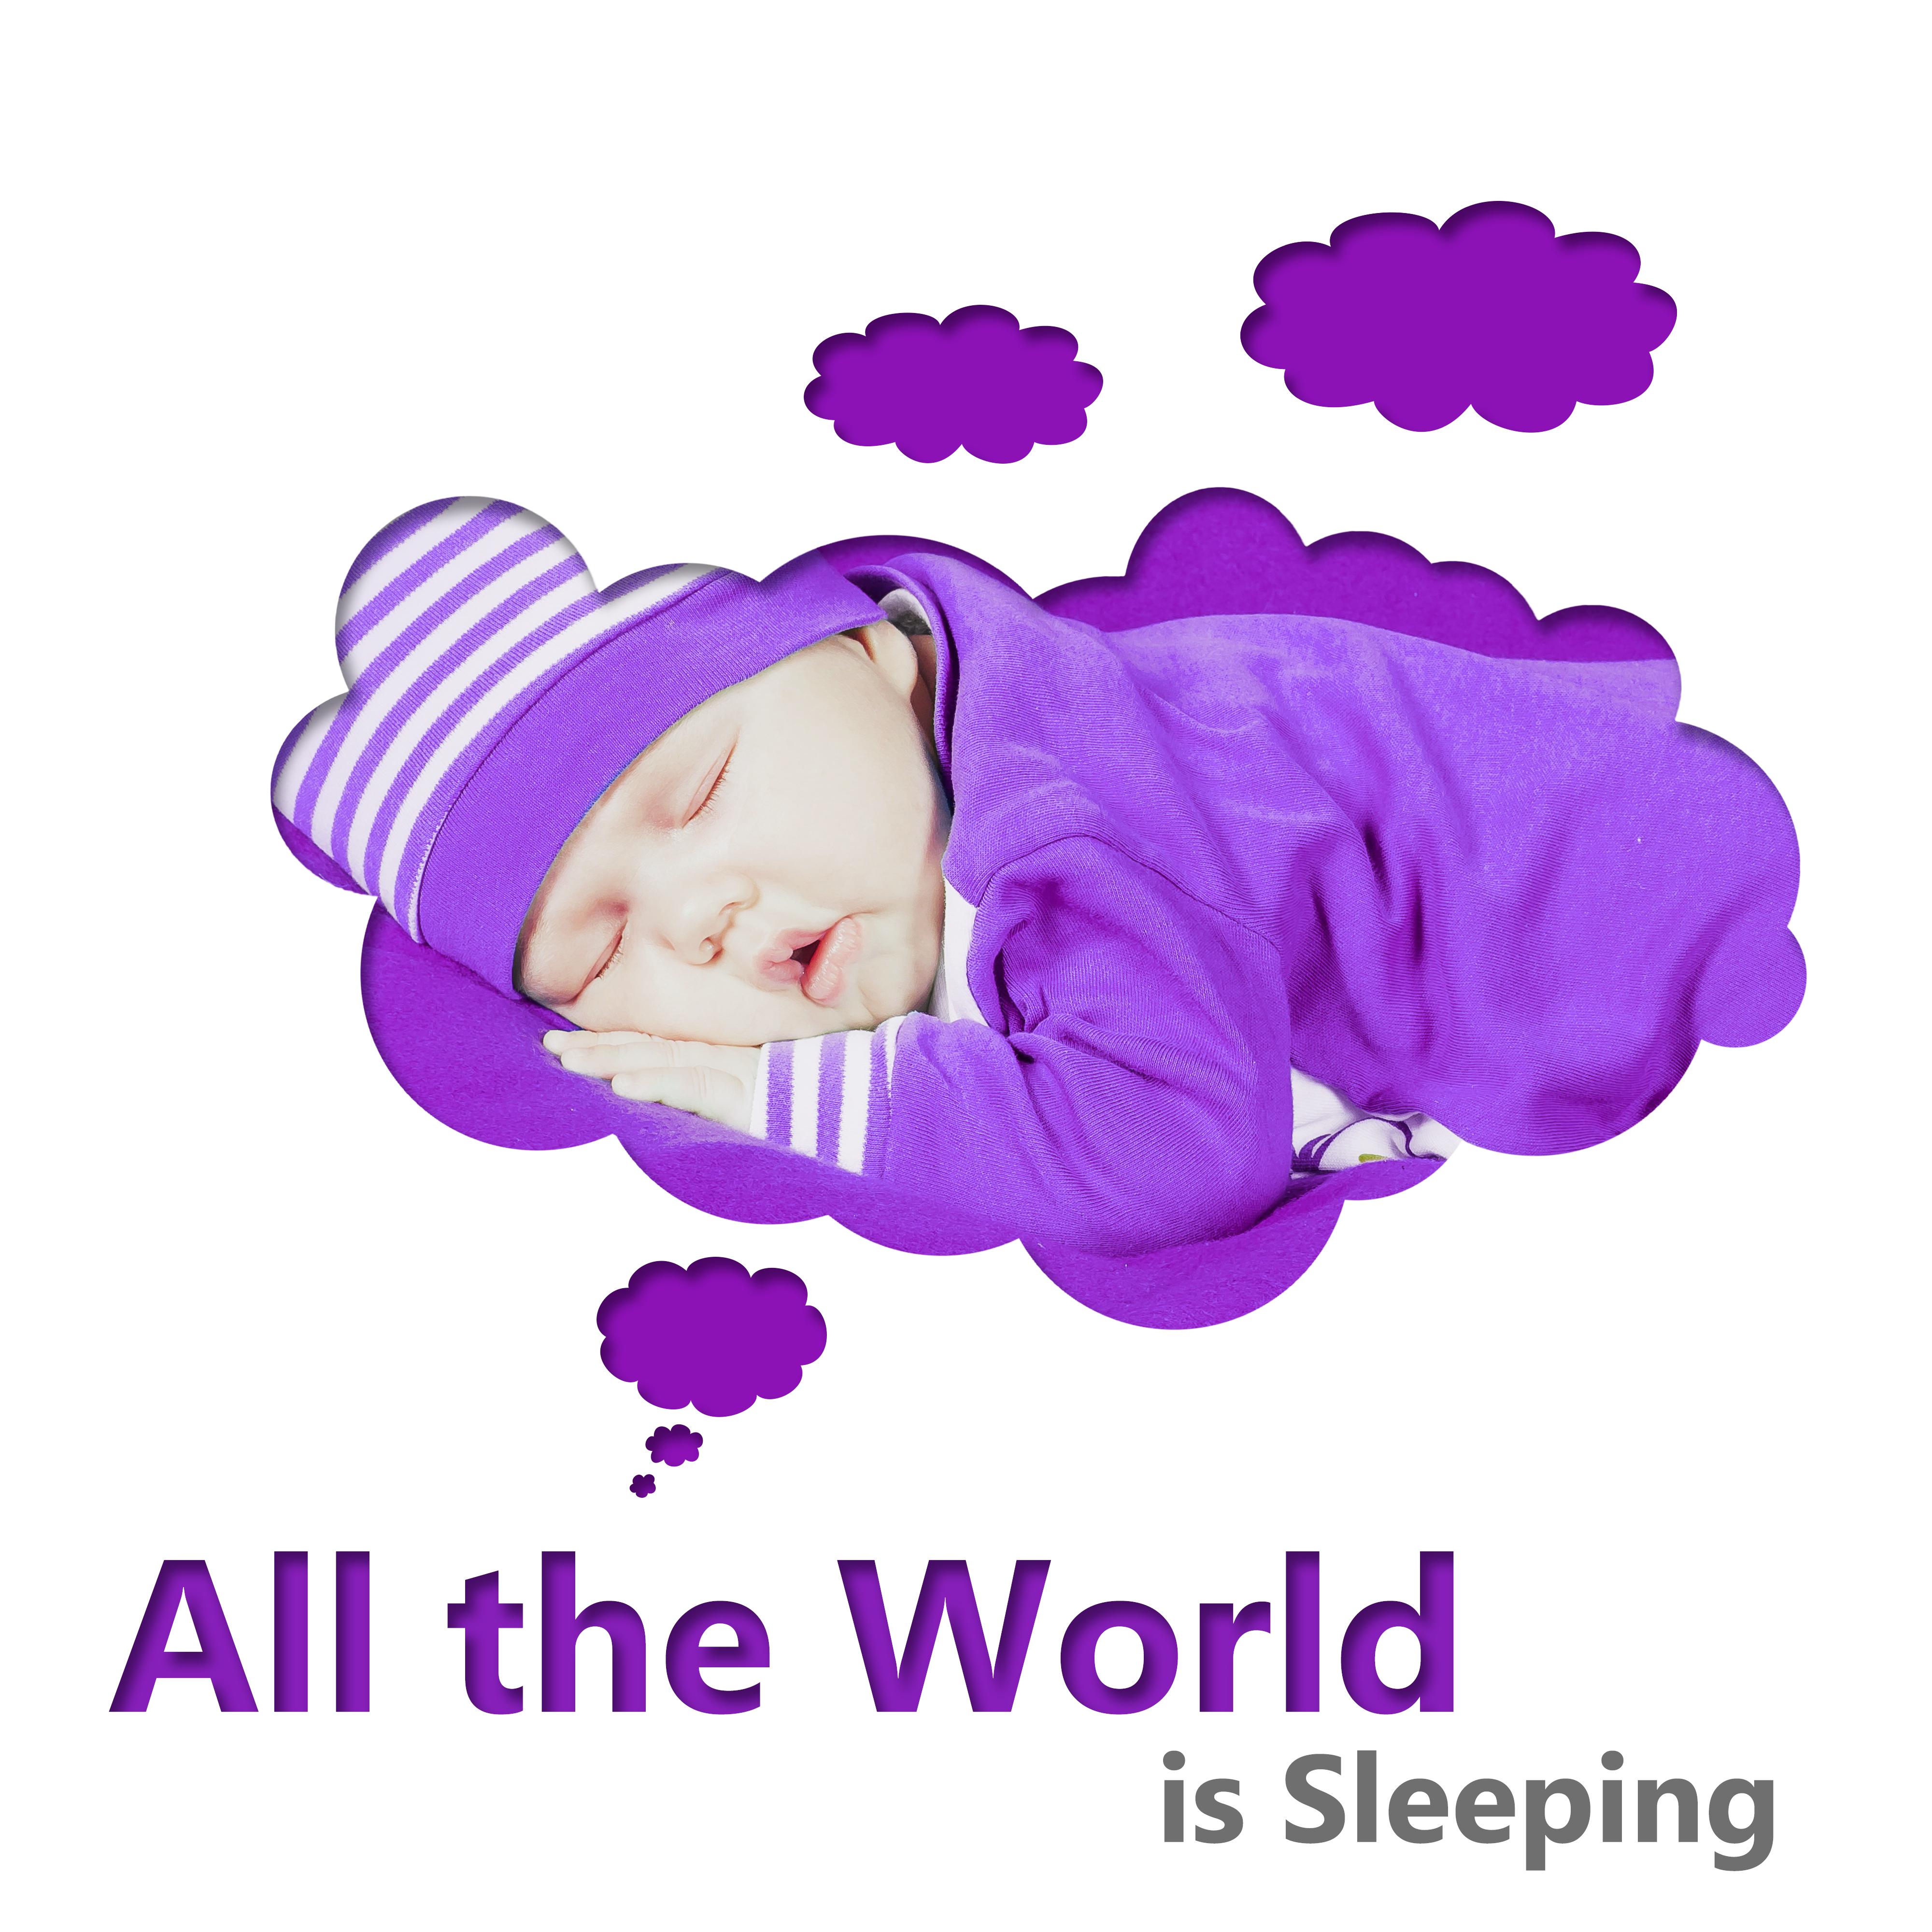 All the World is Sleeping - Relaxation and Deep Sleep, Baby Sleep Music Lullabies, Soft Lullabies Nighttime for Newborn, Lullaby & Goodnight